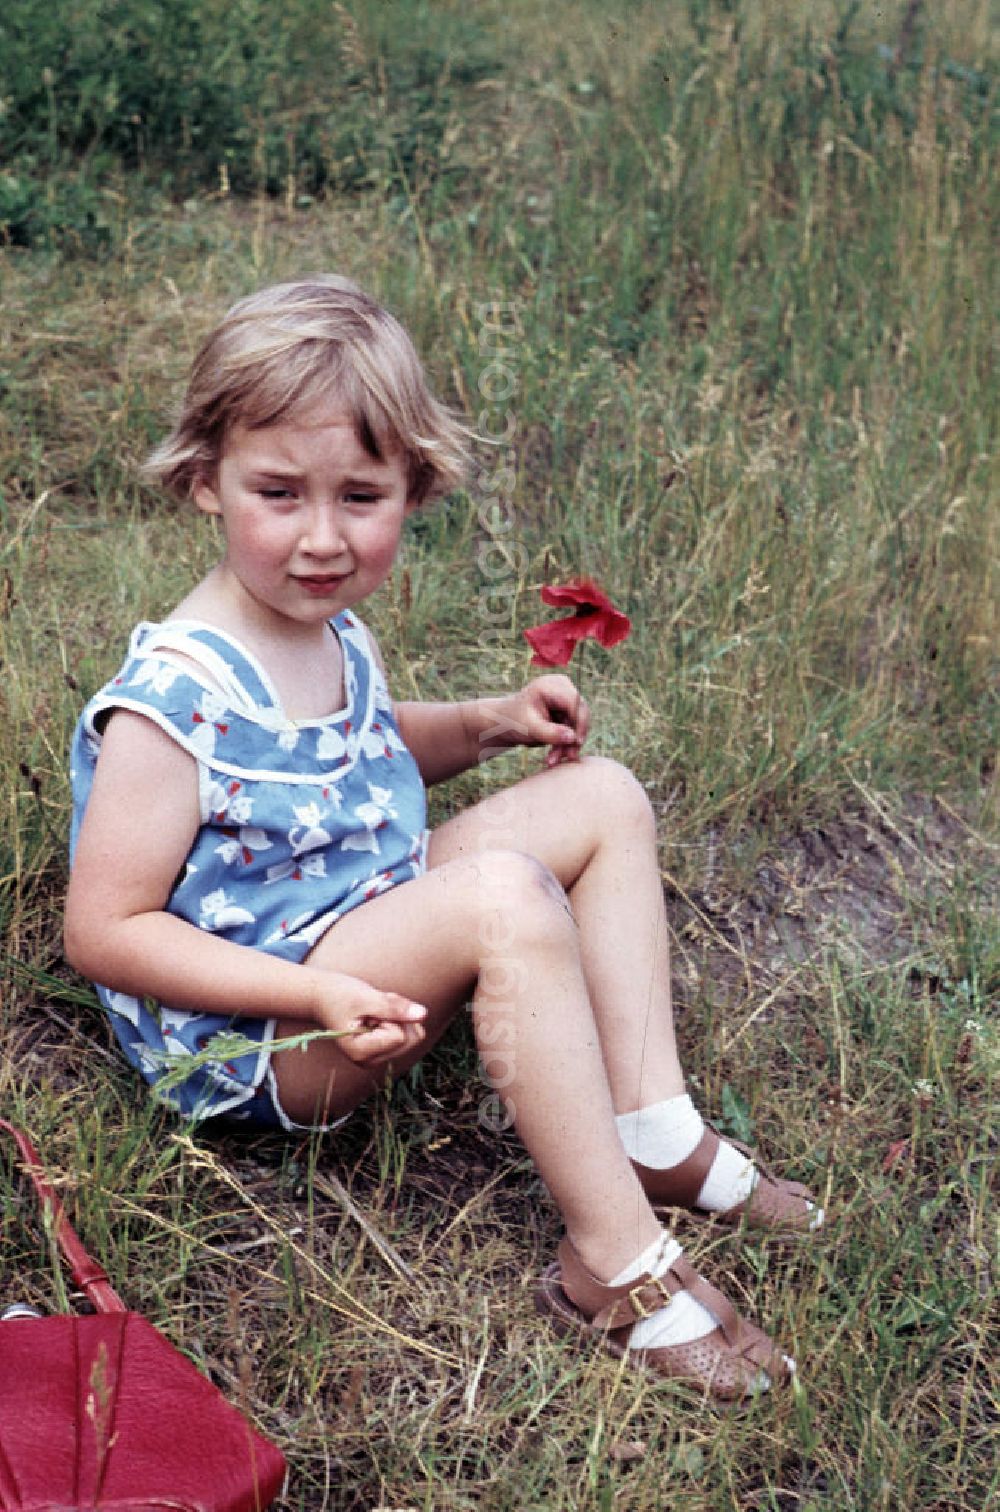 Schkopau: Mädchen pflückt Mohnblumen. Girl picking poppies.